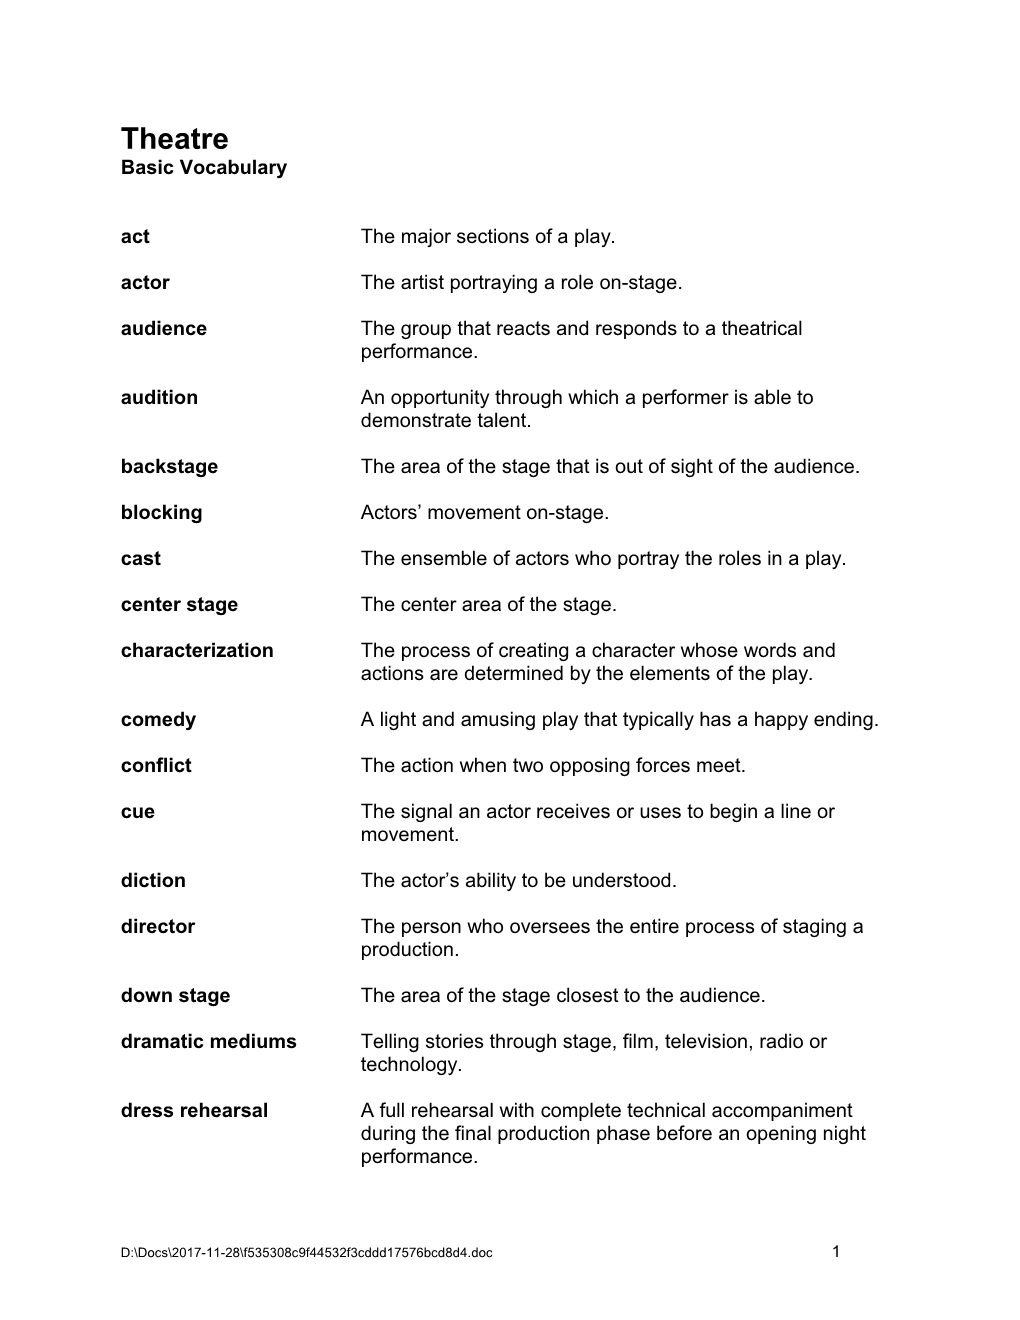 Theatre Vocabulary List